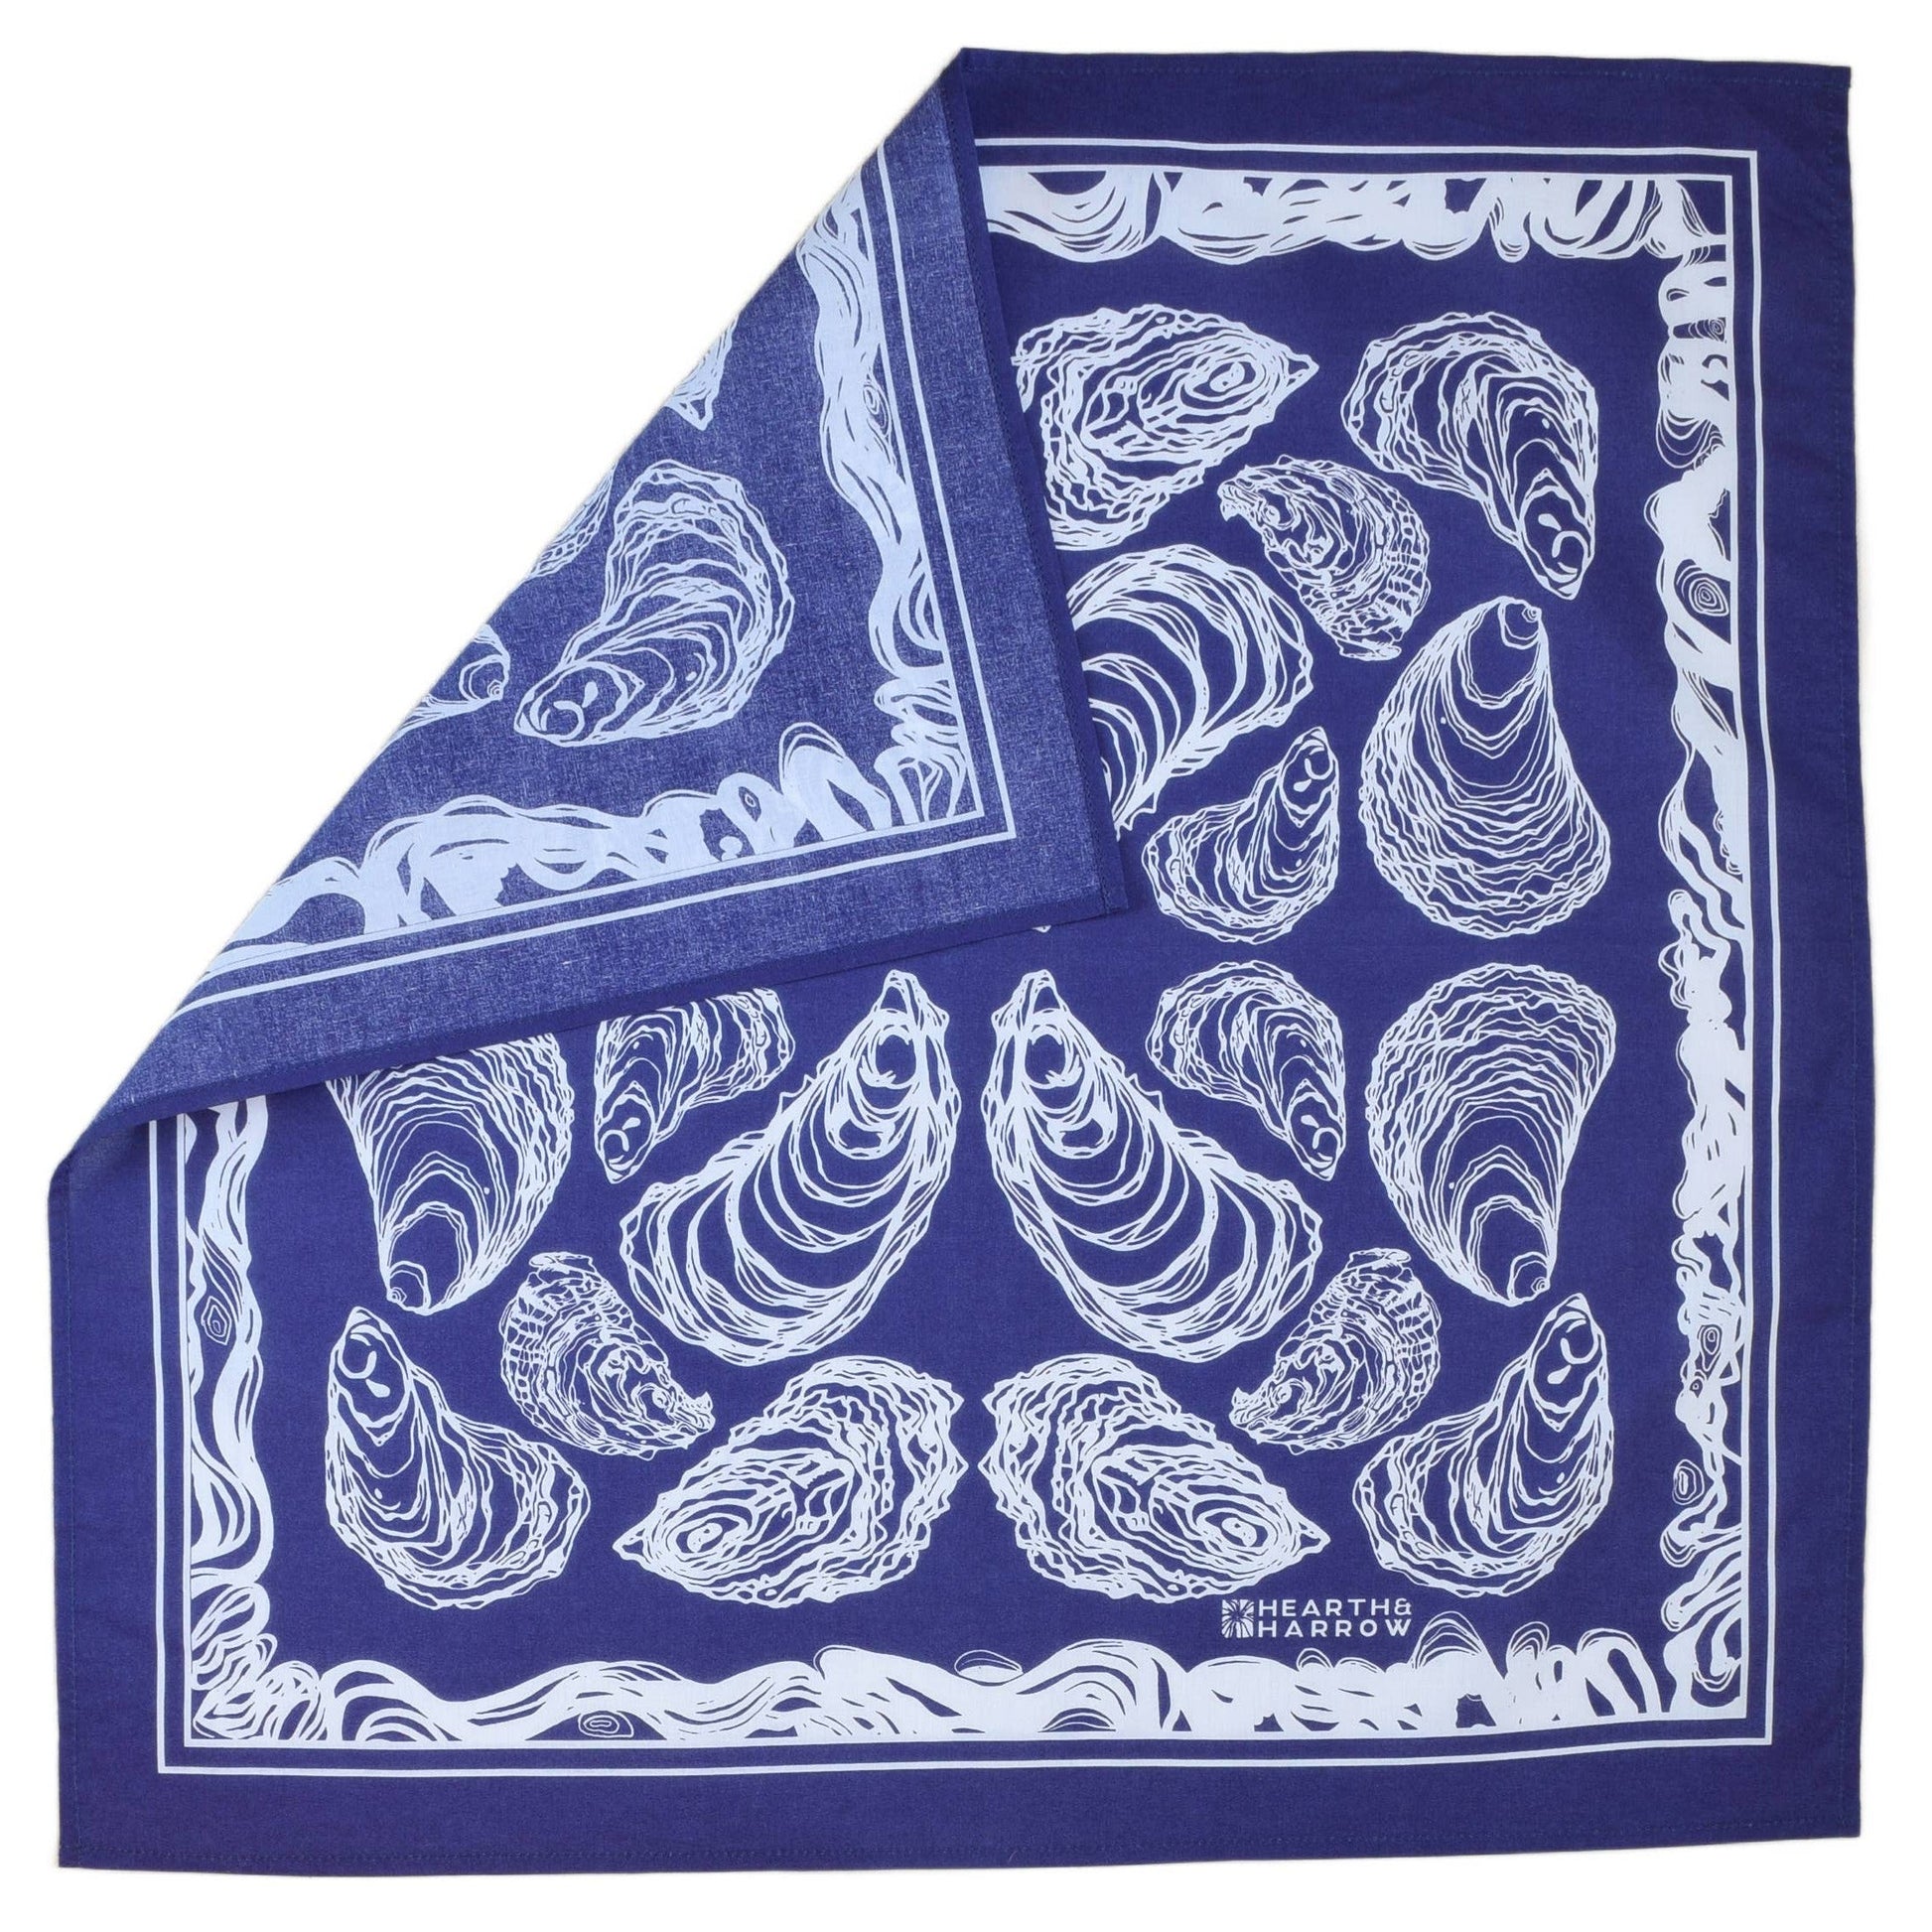 Royal Blue Oyster Bandana | Hand Screen-printed Handkerchief